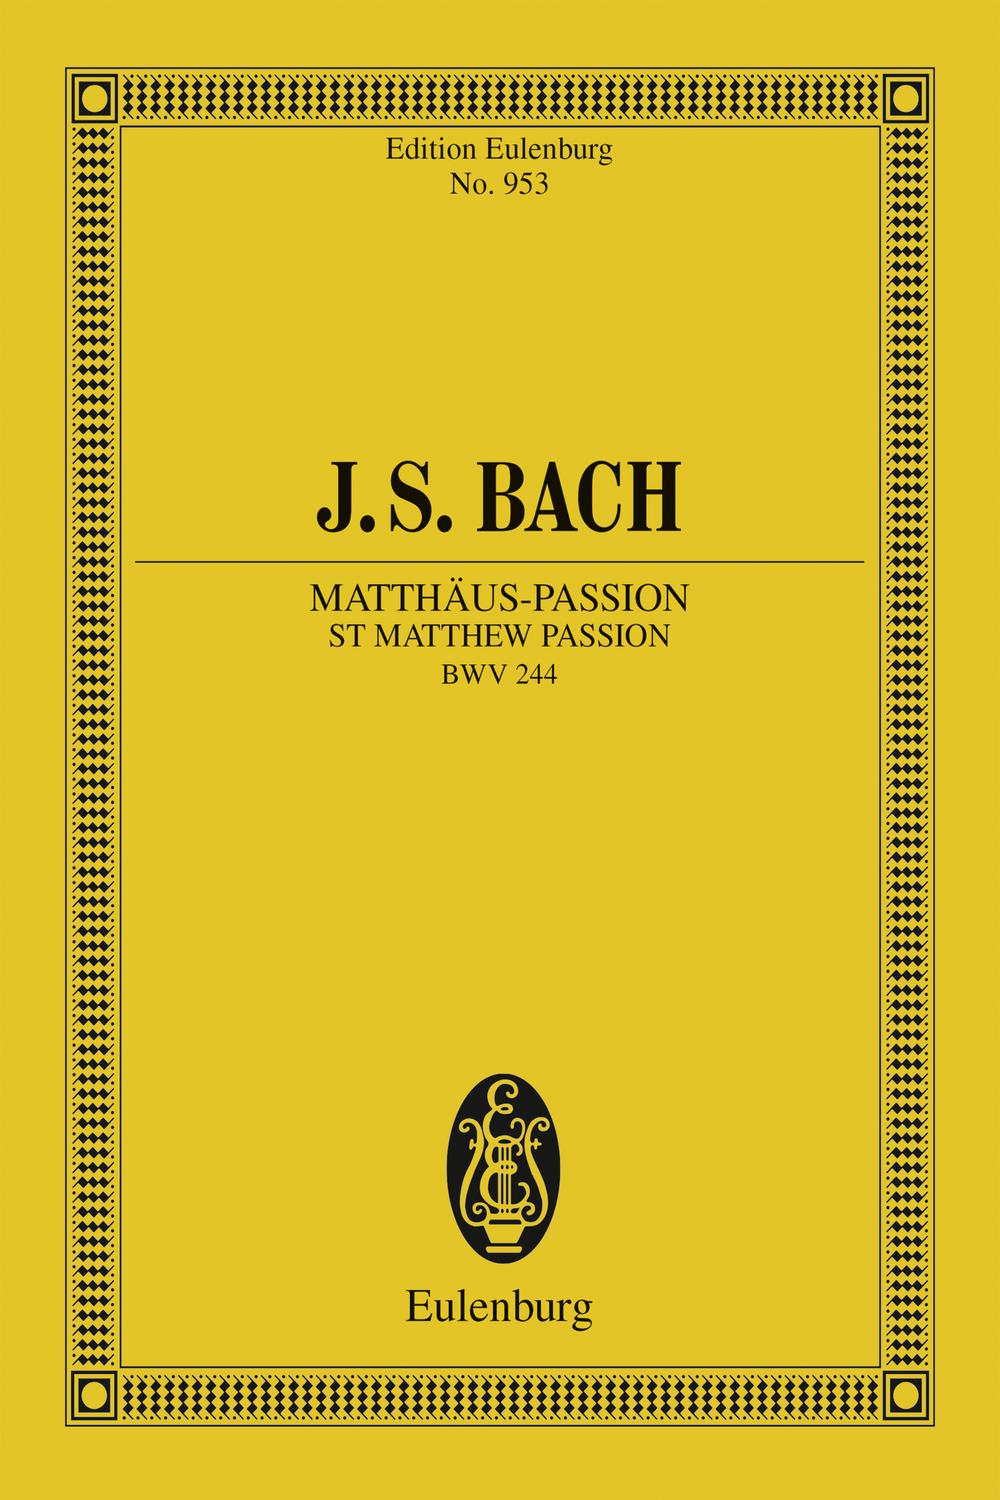 St Matthew Passion - Johann Sebastian Bach,,